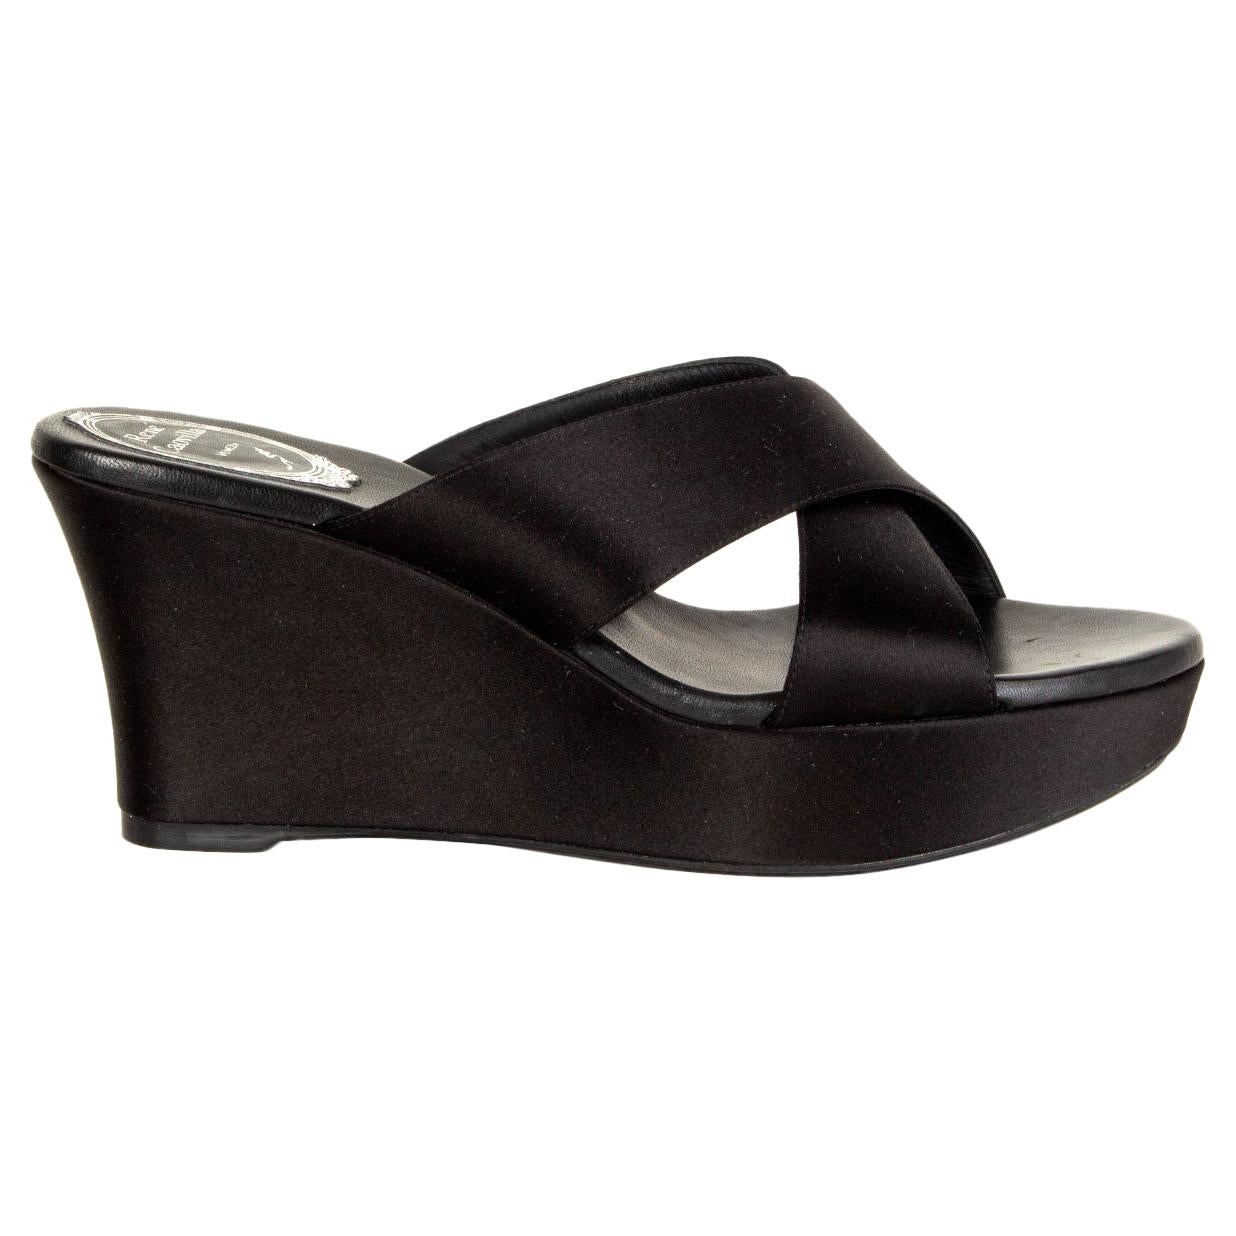 RENE CAOVILLA black SATIN WEDGE Sandals Shoes 38.5 For Sale